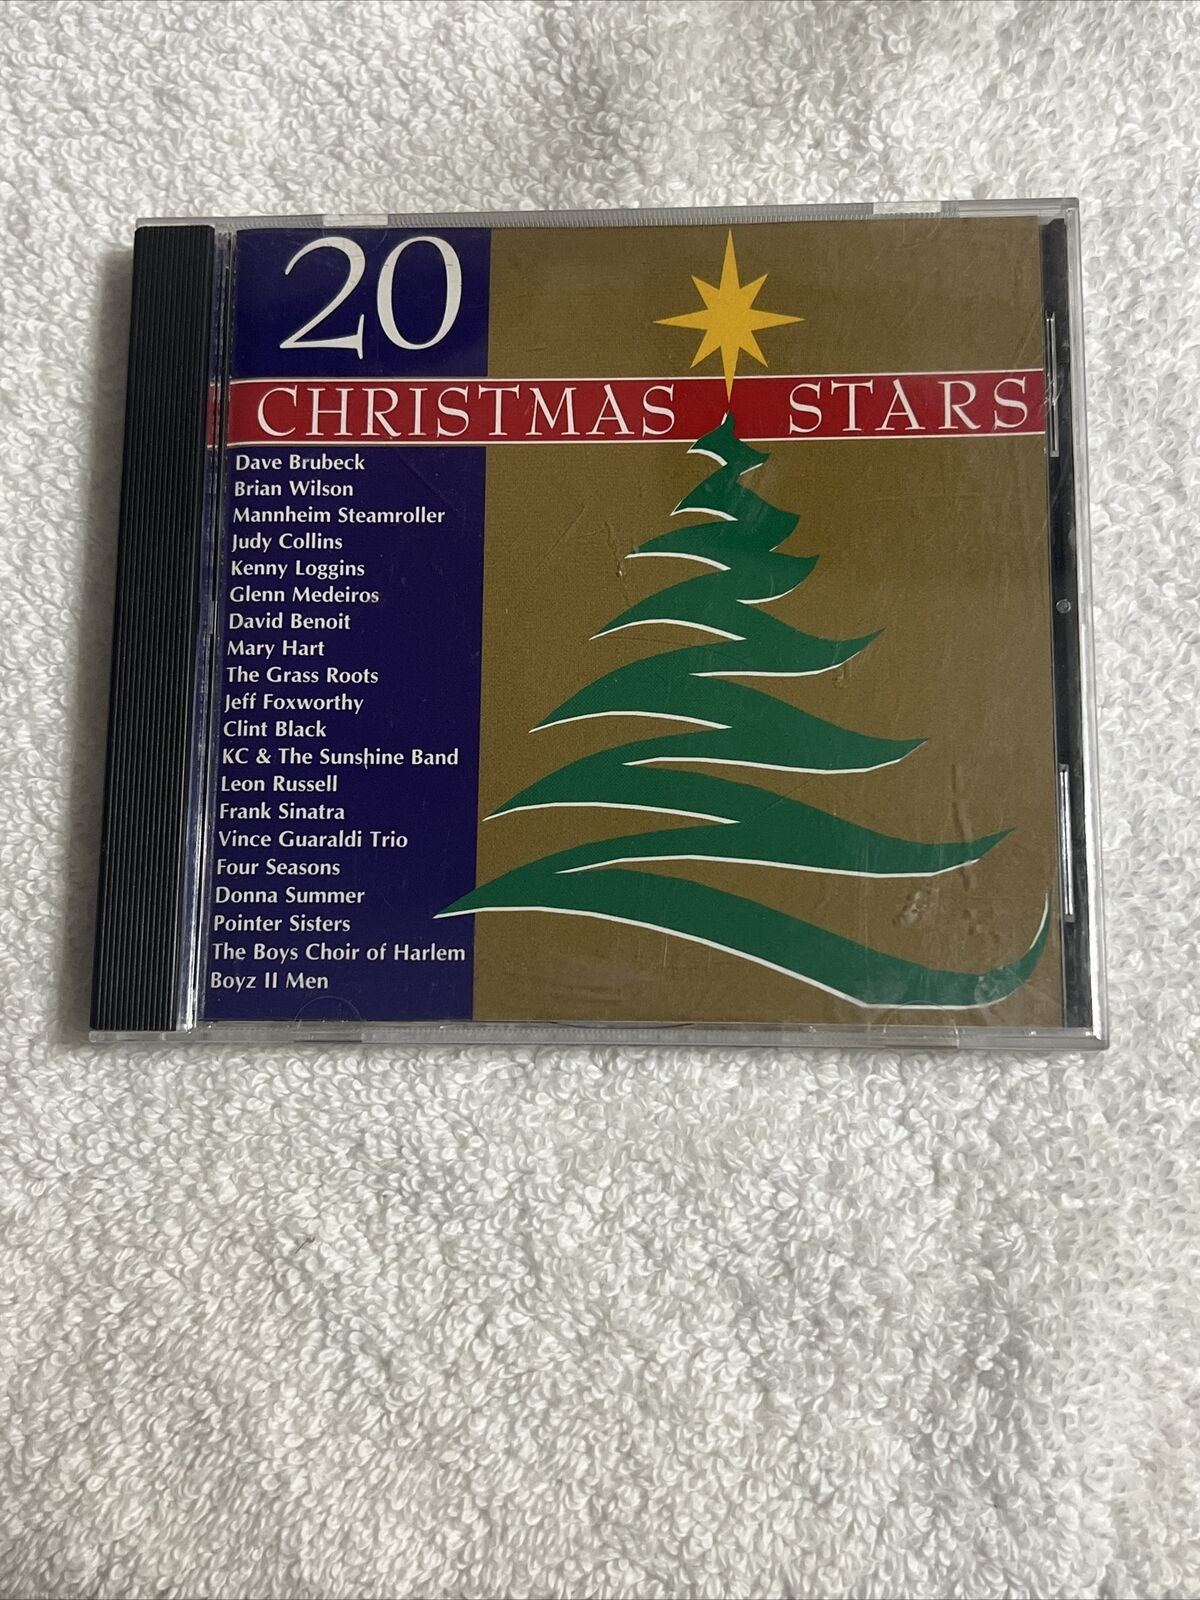 20 CHRISTMAS STARS III - VARIOUS ARTISTS (CD, 2001) CMND-1049 Works Fully